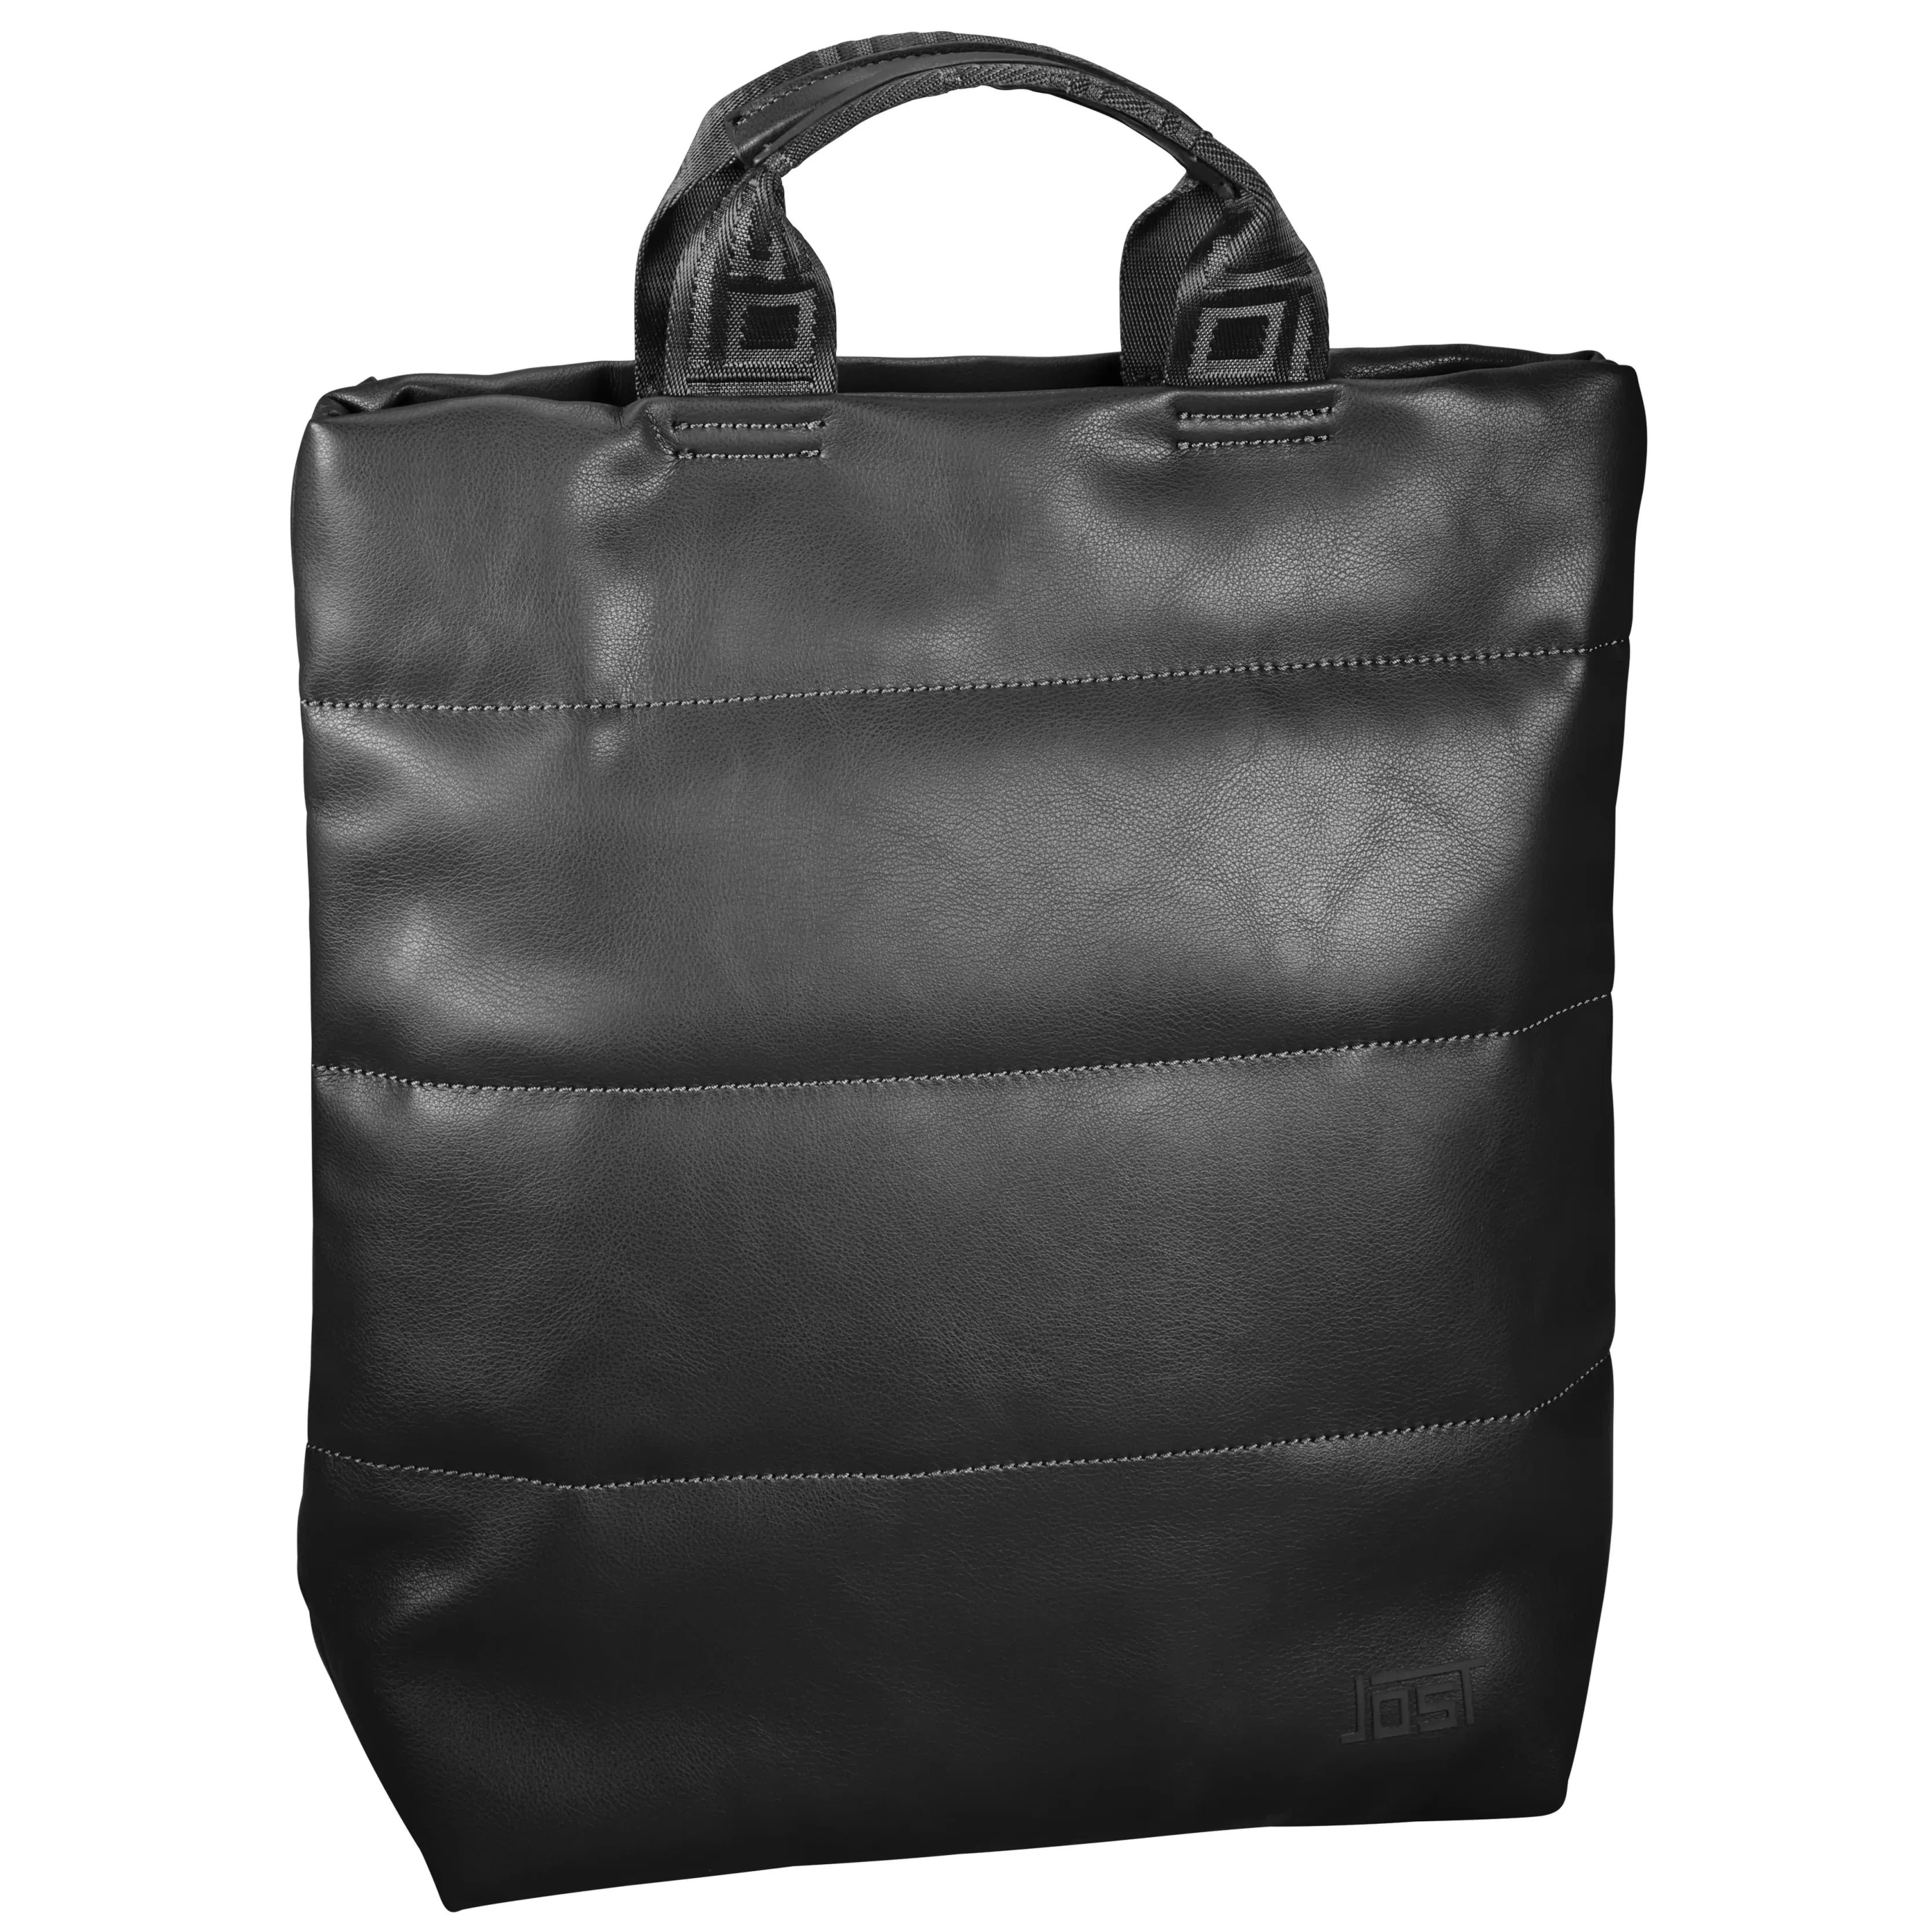 Jost Kaarina X-Change Bag XS 35 cm - Khaki